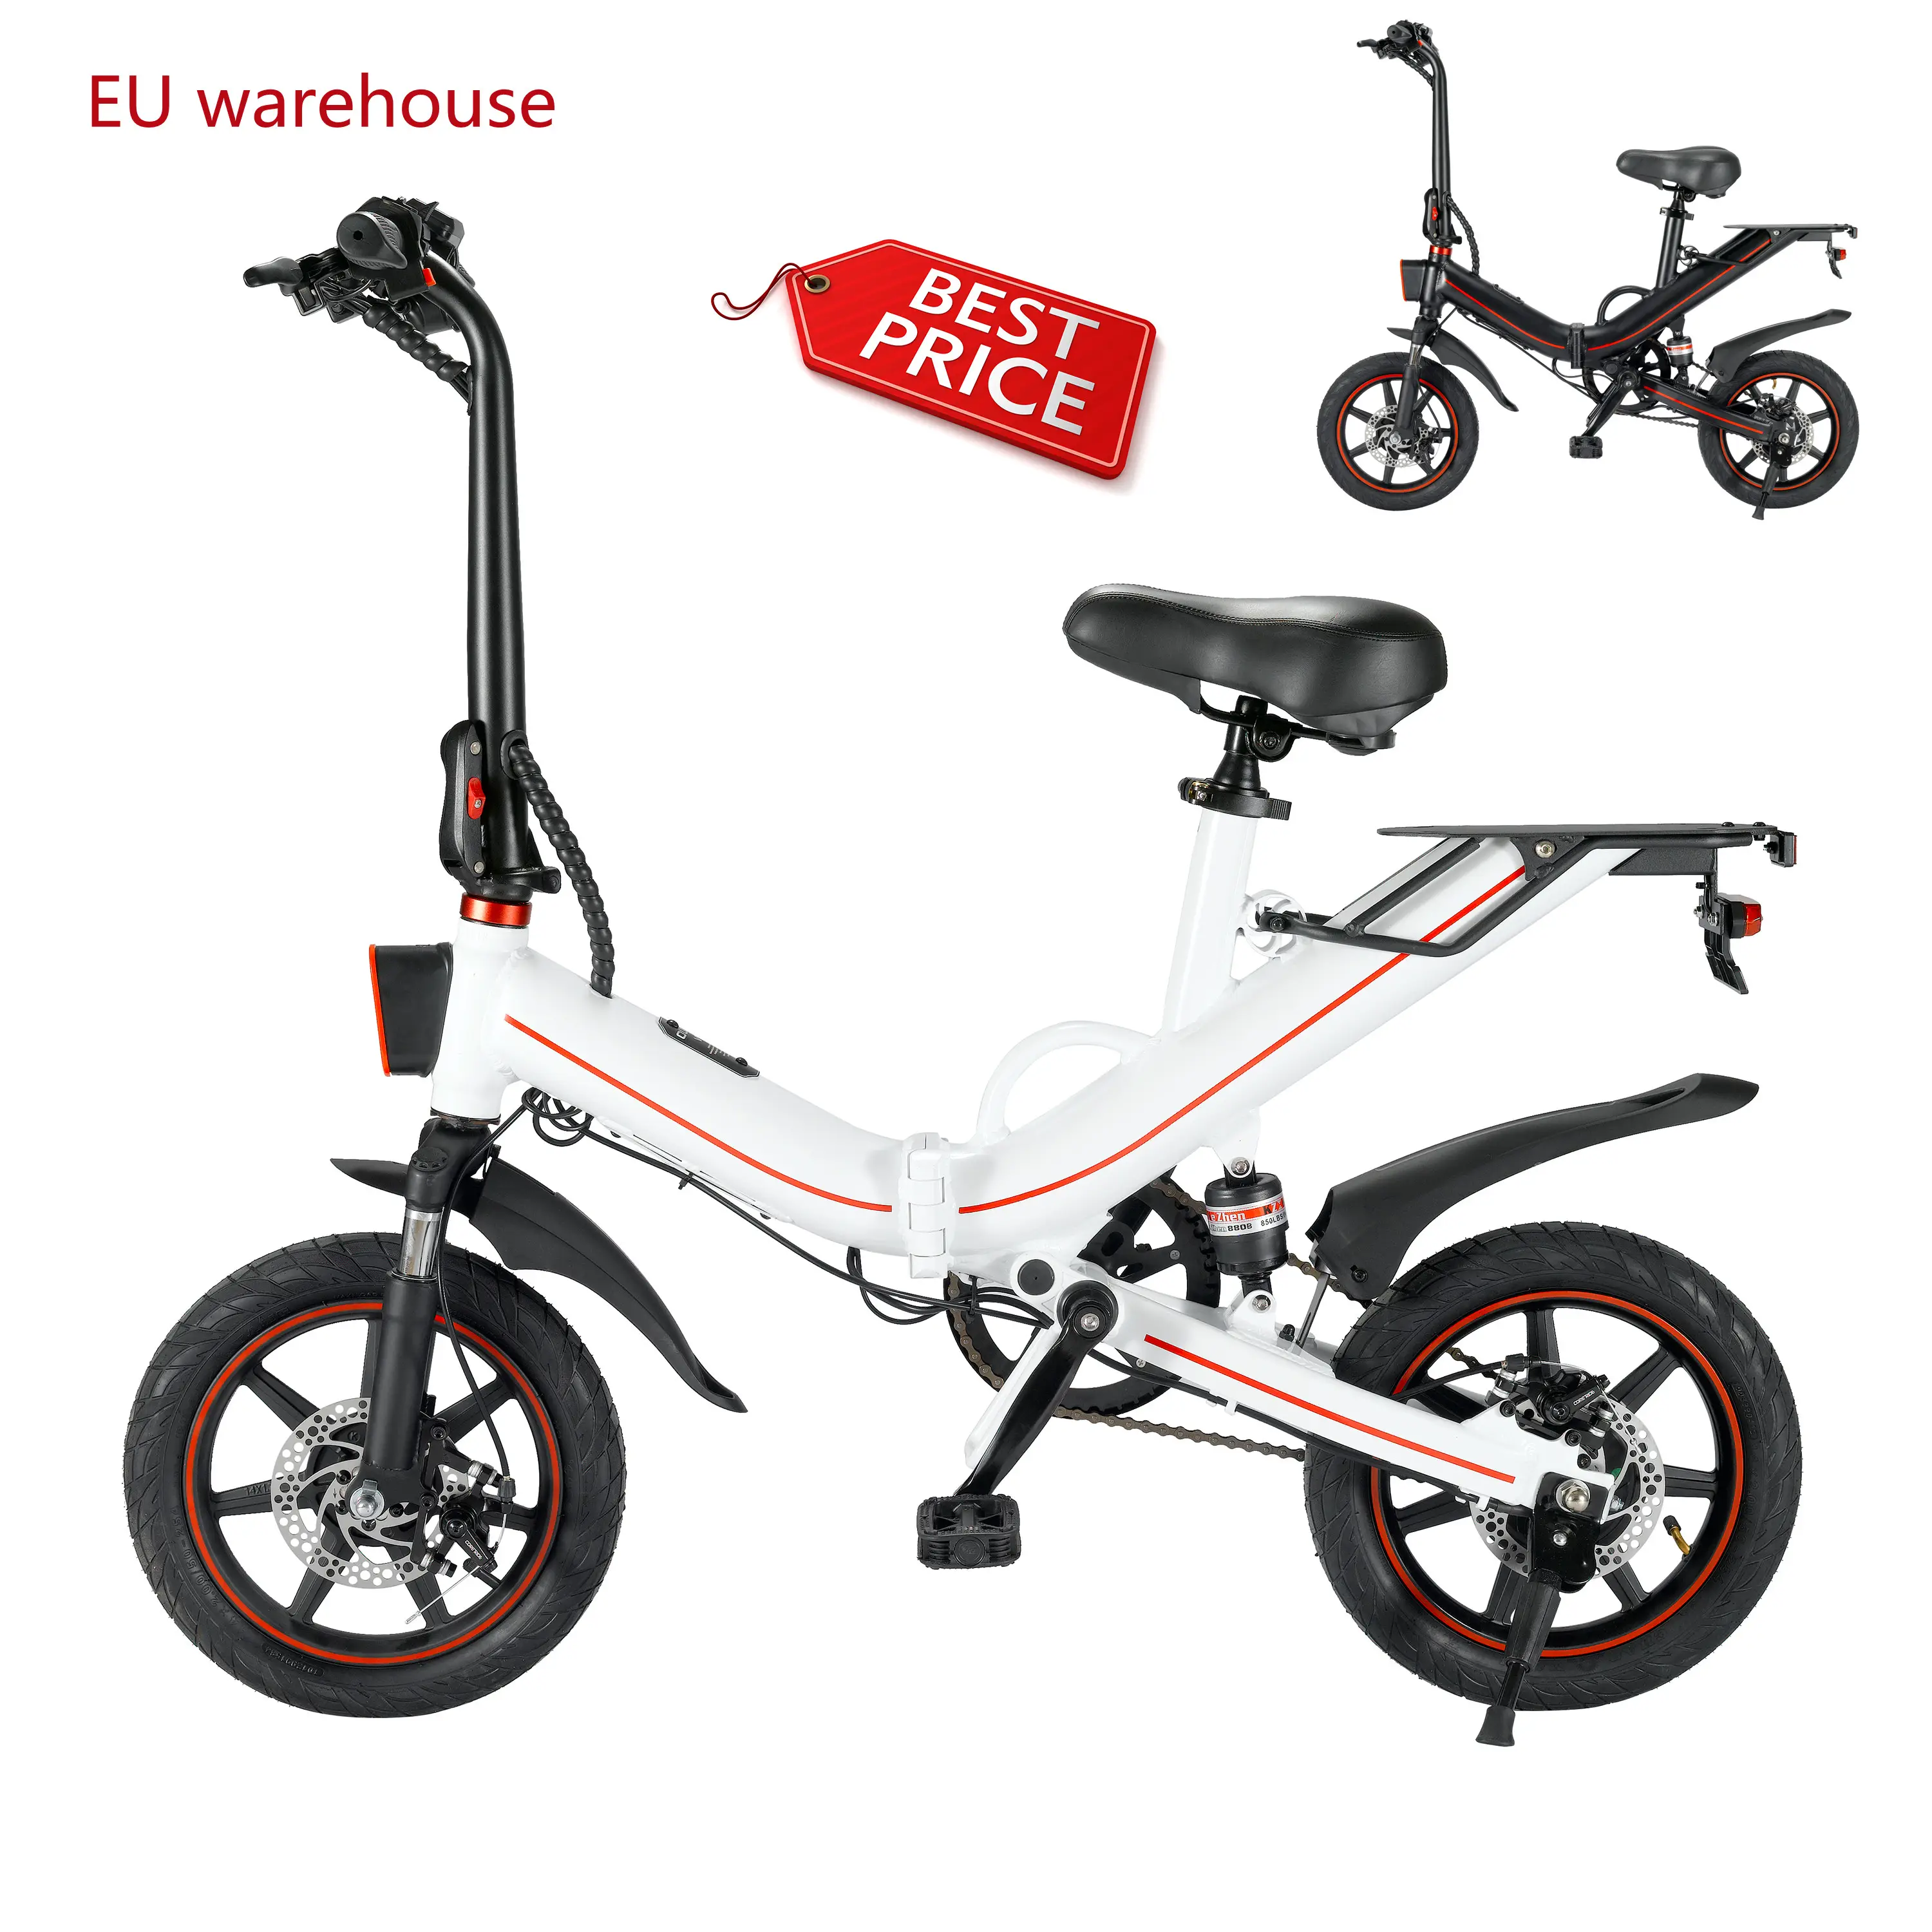 Ouxi V1 V5 e الدراجات 15ah بطارية دراجة كهربائية قابلة للطي 70 كجم المدى دراجات كهربائية شراء من الاتحاد الأوروبي usa warehouseCE بنفايات